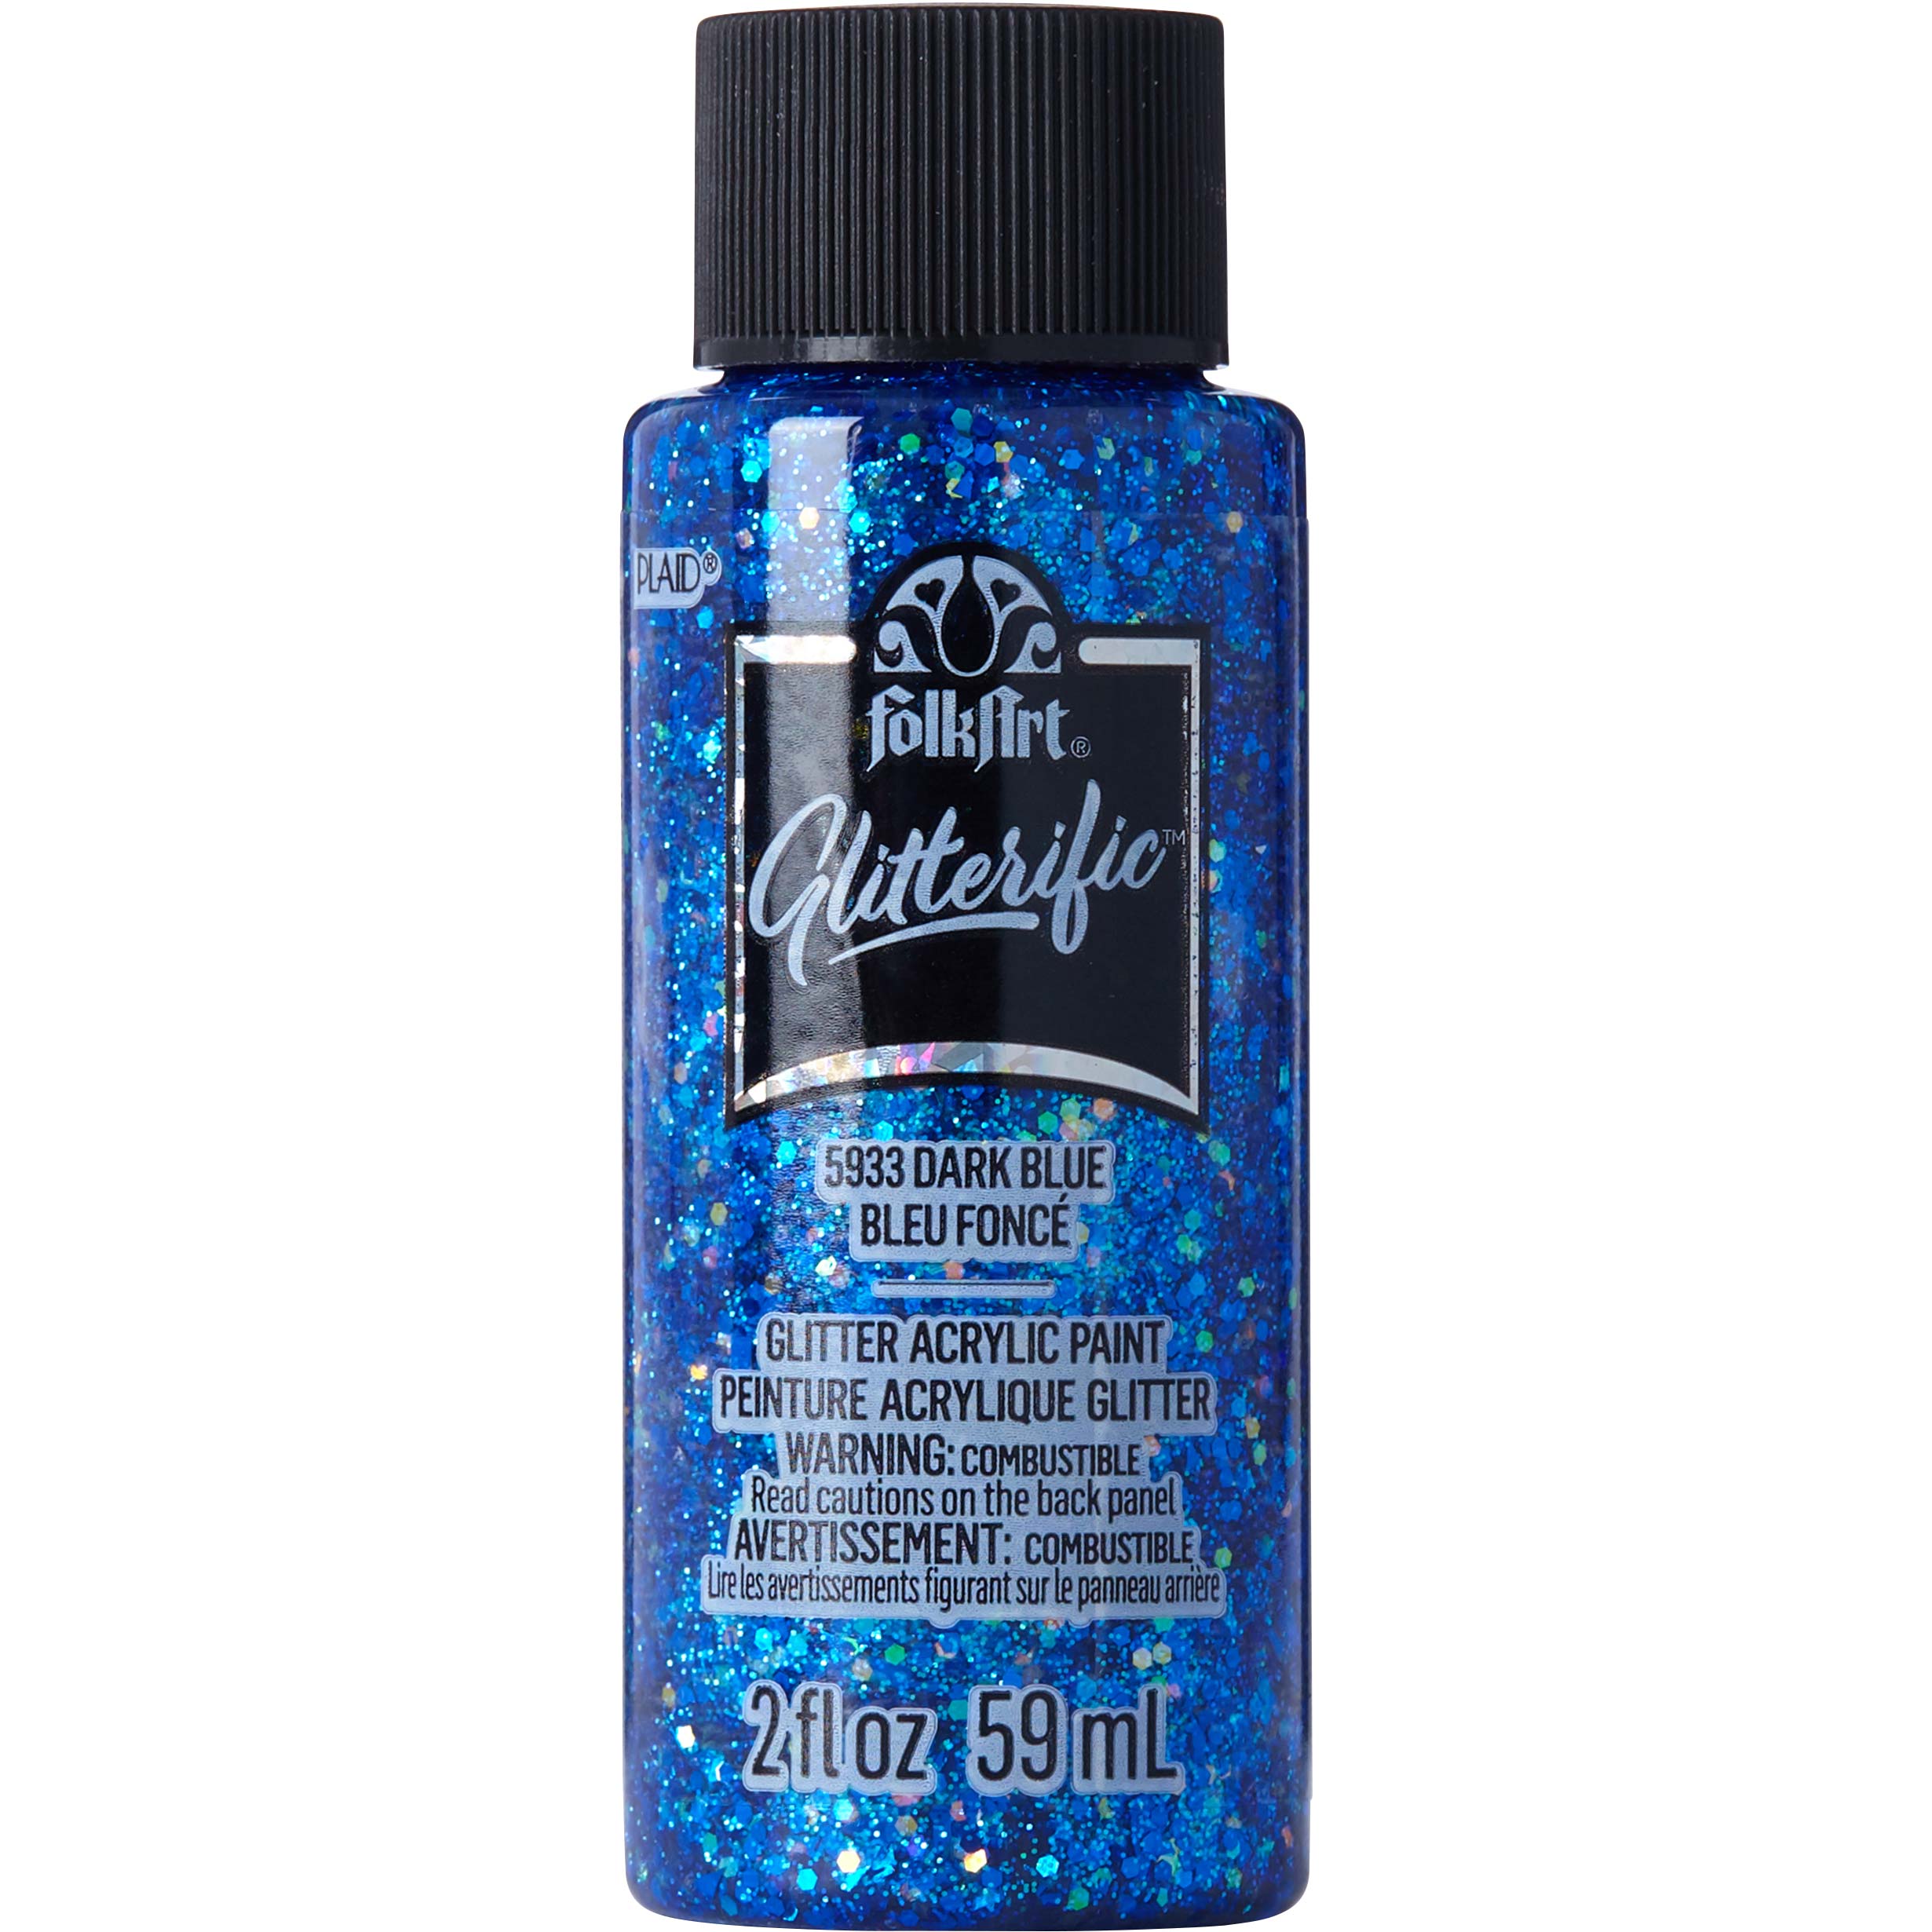 Shop Plaid FolkArt ® Glitterific™ Acrylic Paint - Dark Blue, 2 oz. - 5933 - 5933 | Plaid Online